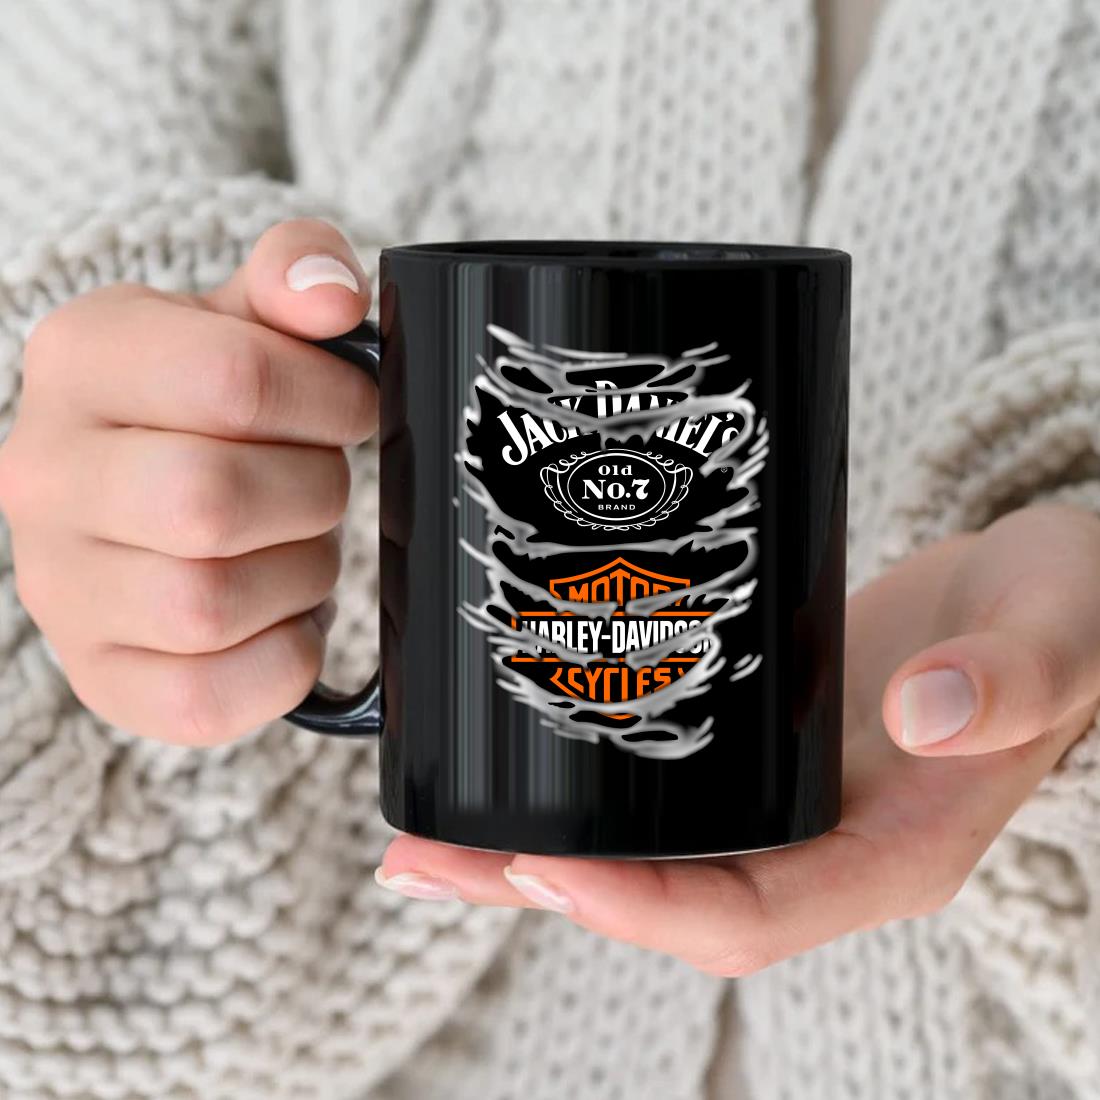 Original Jack Daniel’s Tennessee Whiskey Harley-davidson Motor Company Mug